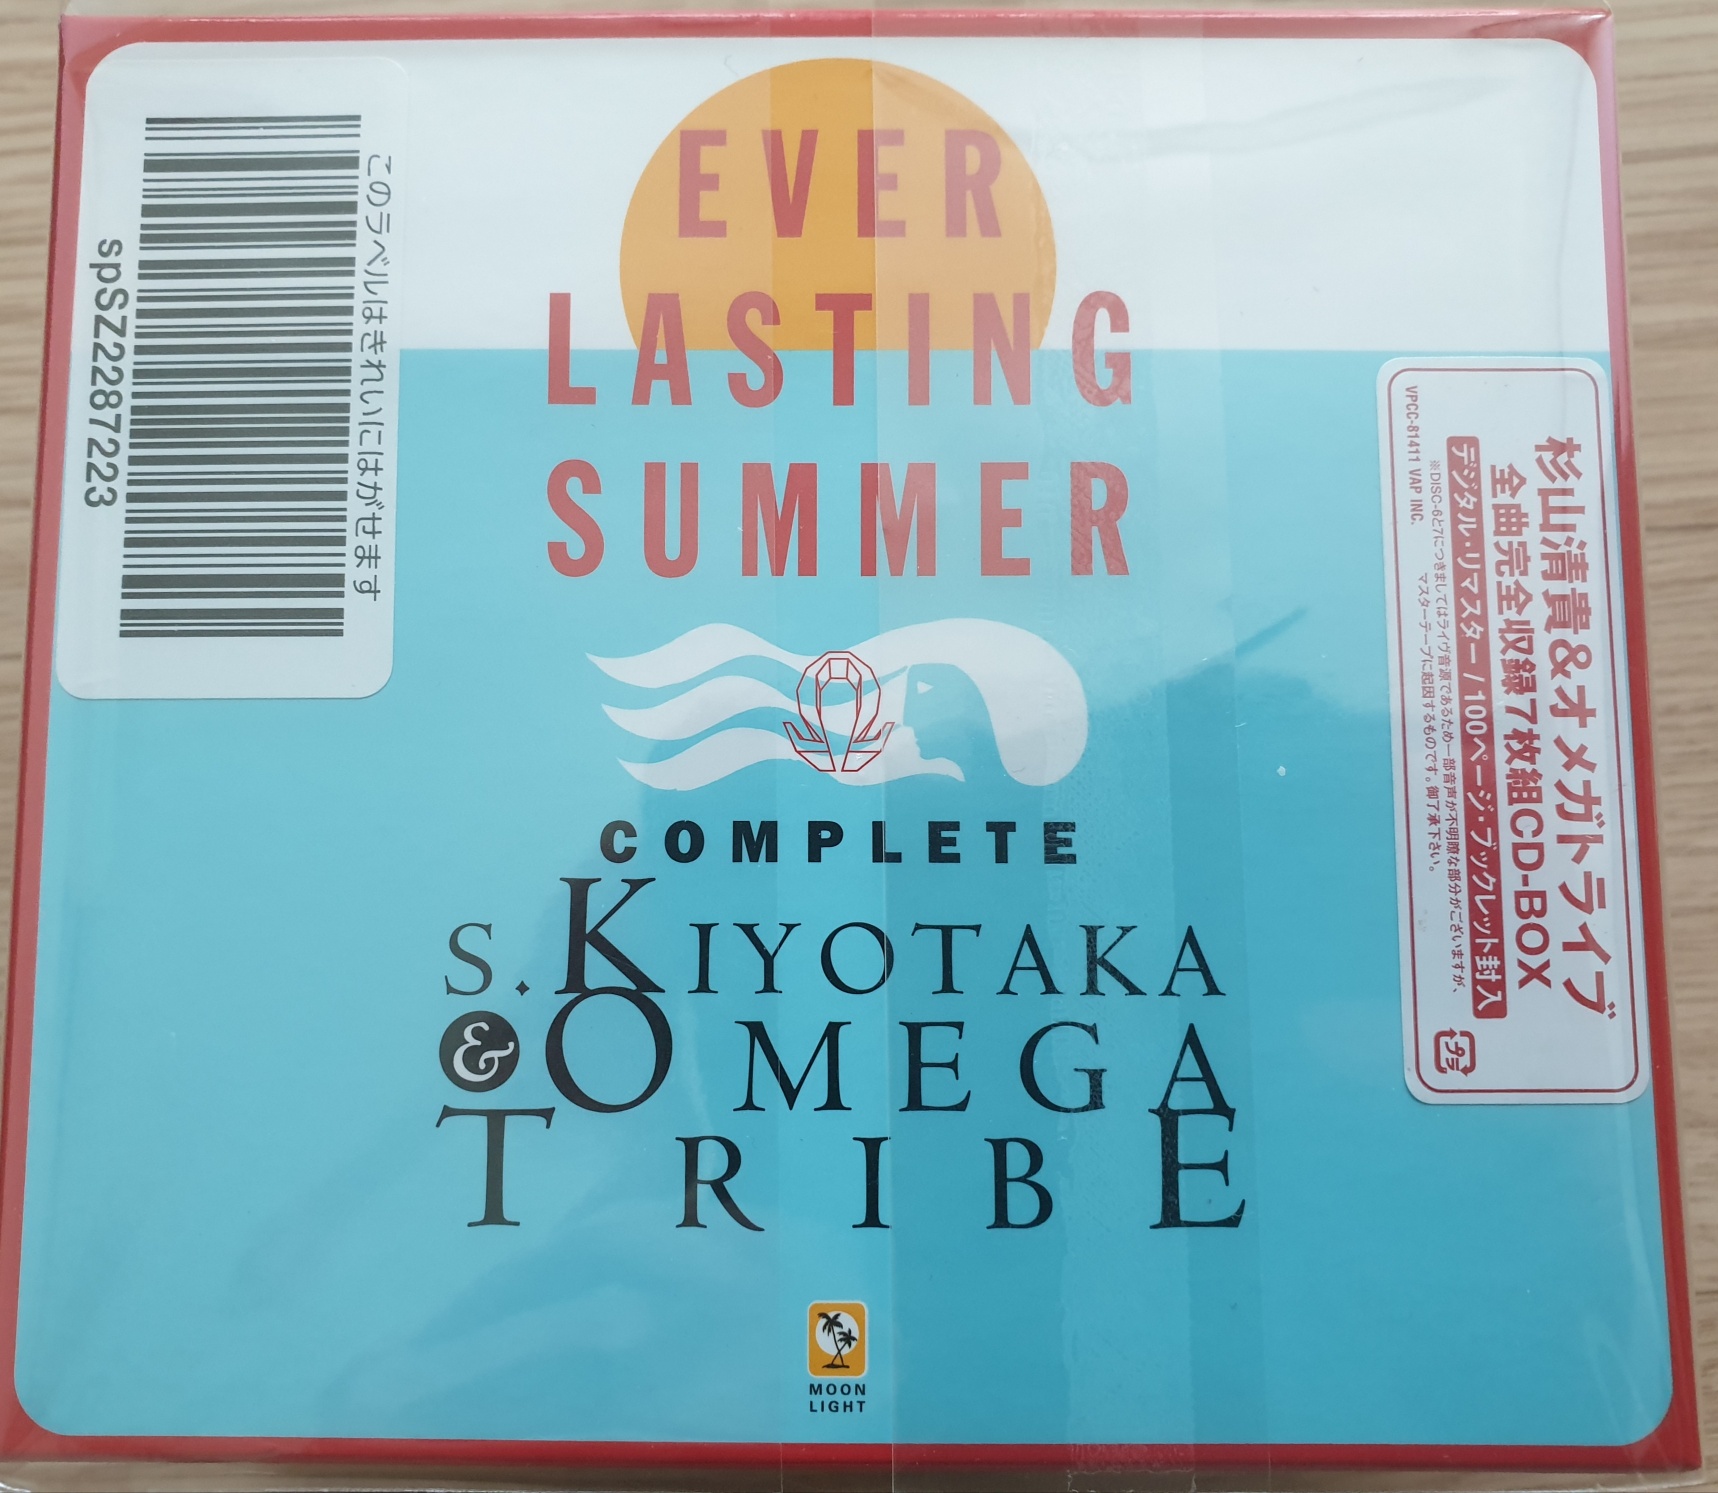 OMEGA TRIBE & S.KIYOTAKA - EVER LASTING SUMMER (1983~1985) > BUG